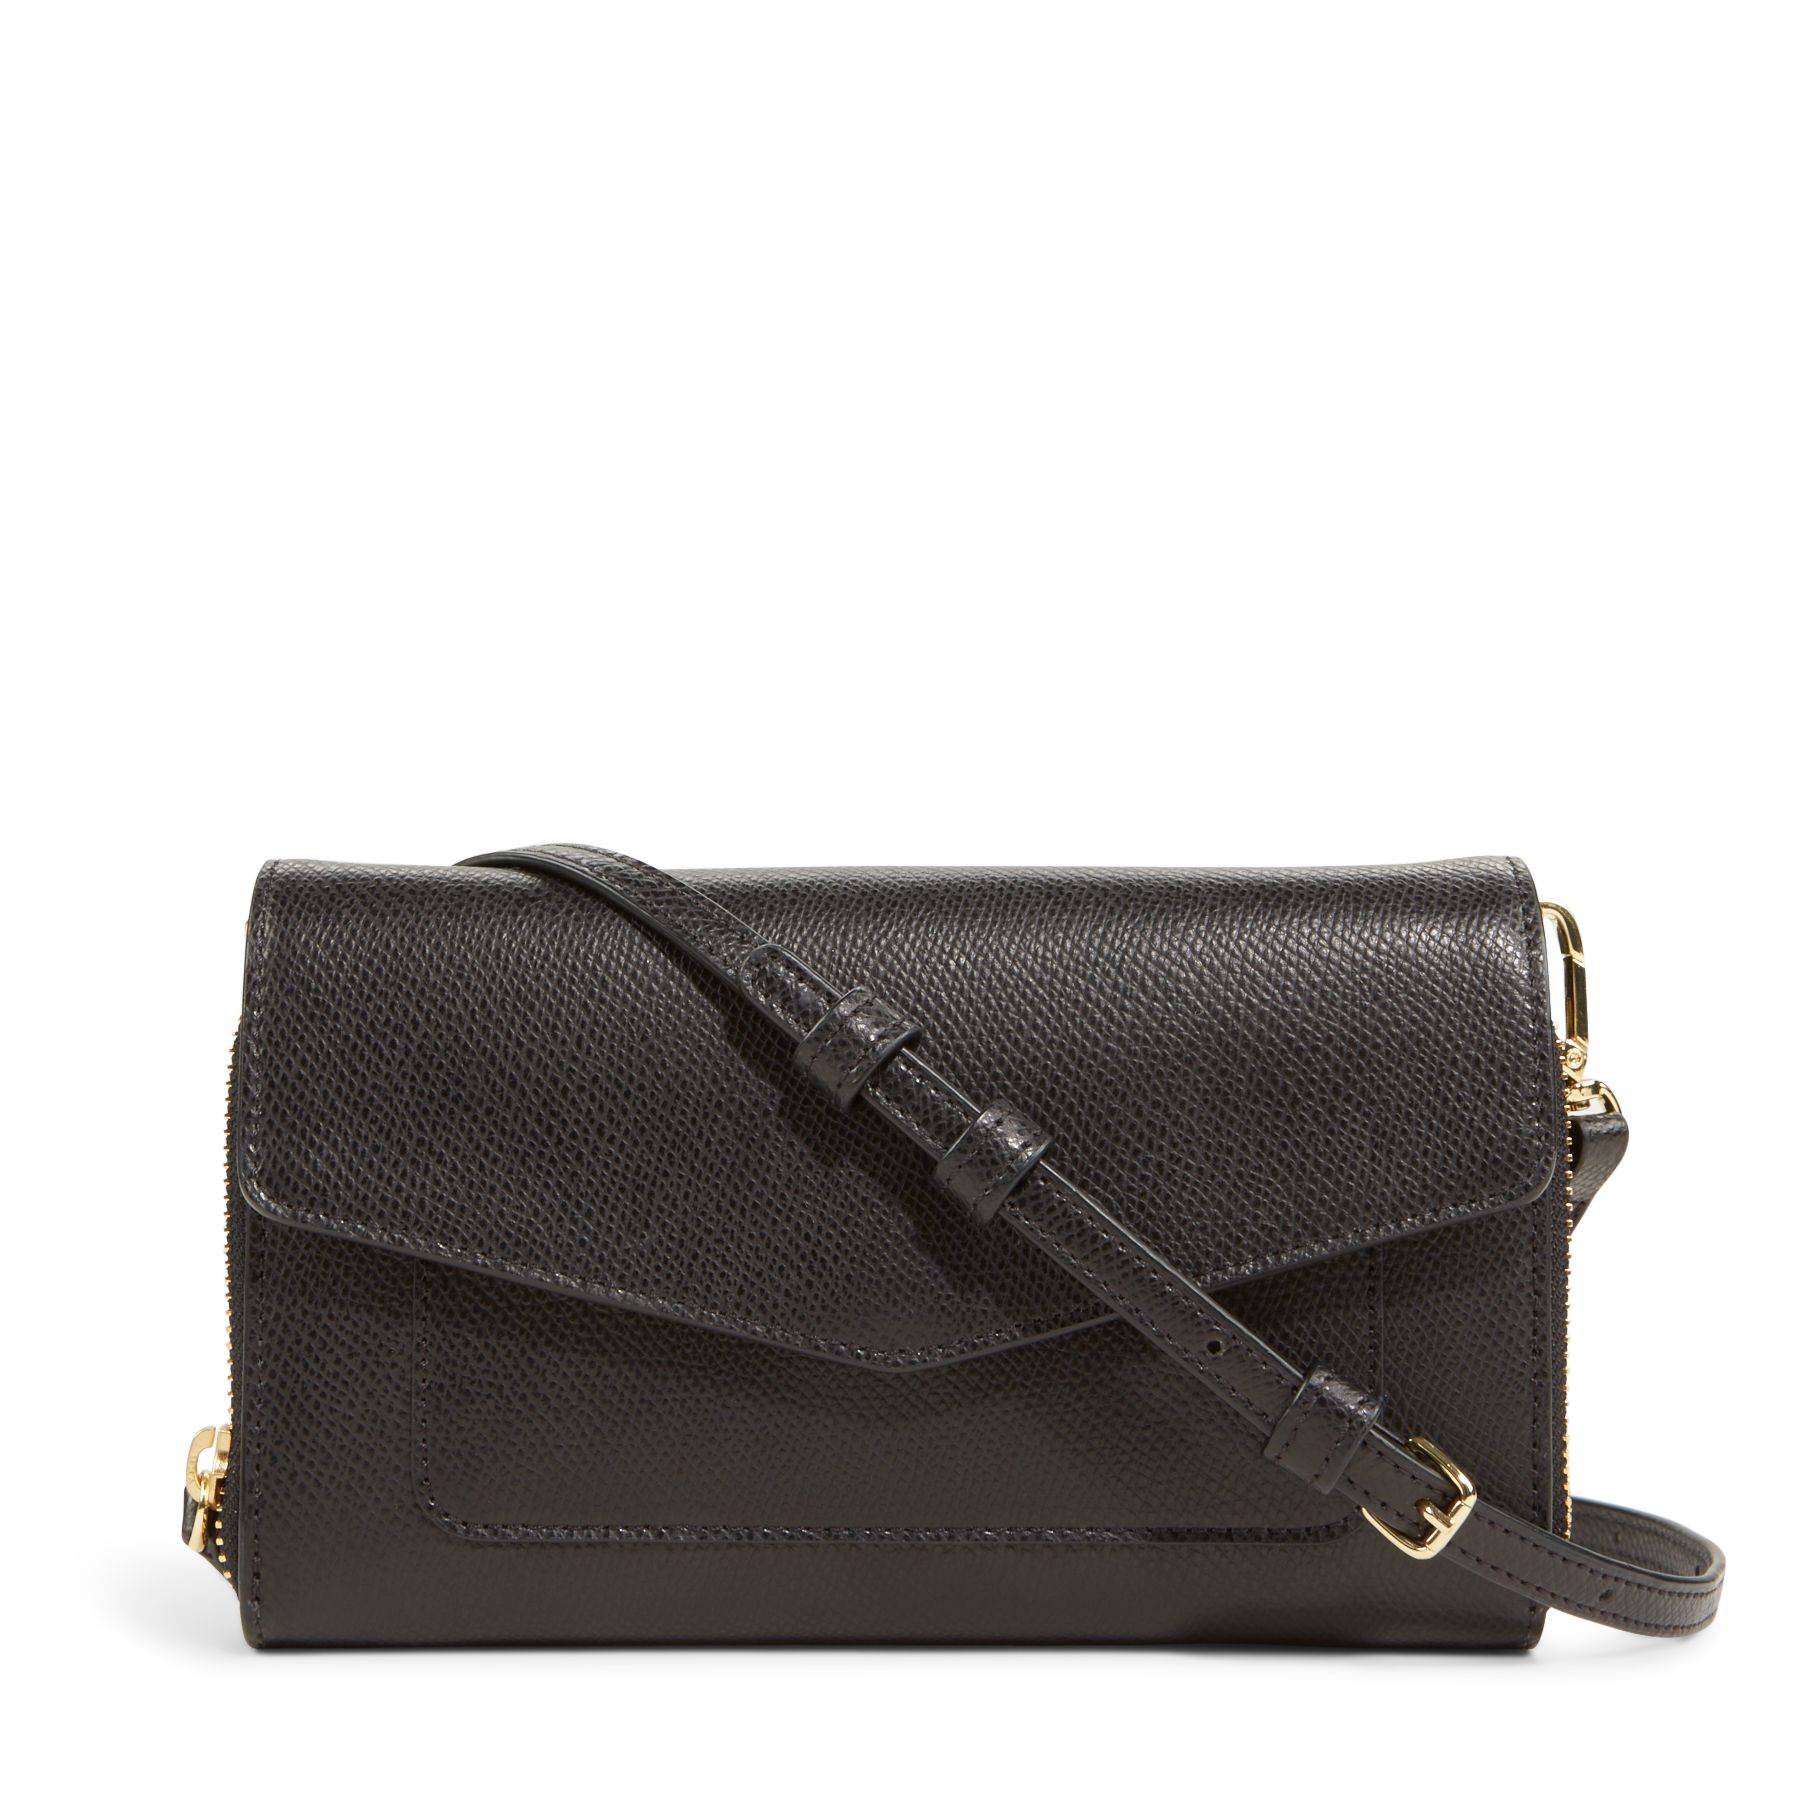 Vera Bradley Leather Ultimate Crossbody Bag | eBay